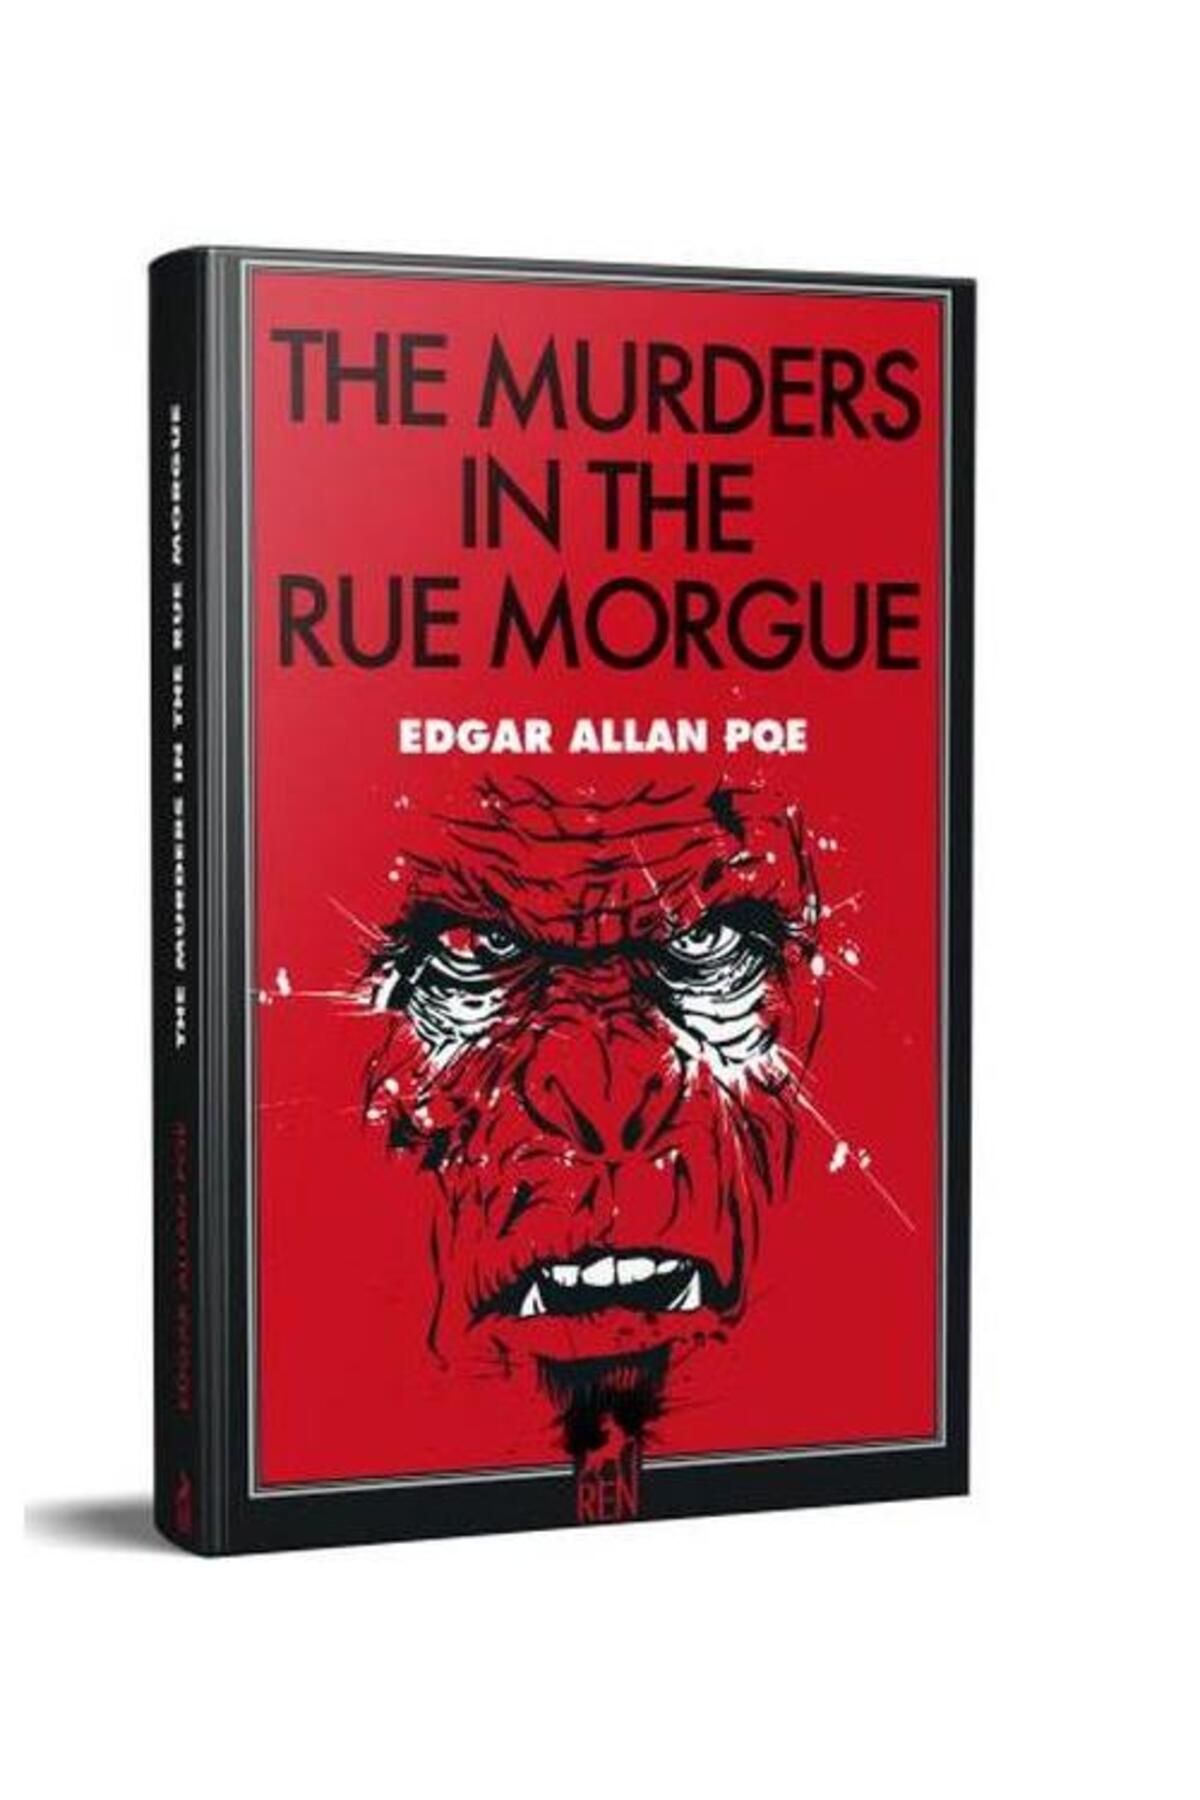 Ren Kitap The Murders In The Rue Morgue / / Edgar Allan Poe